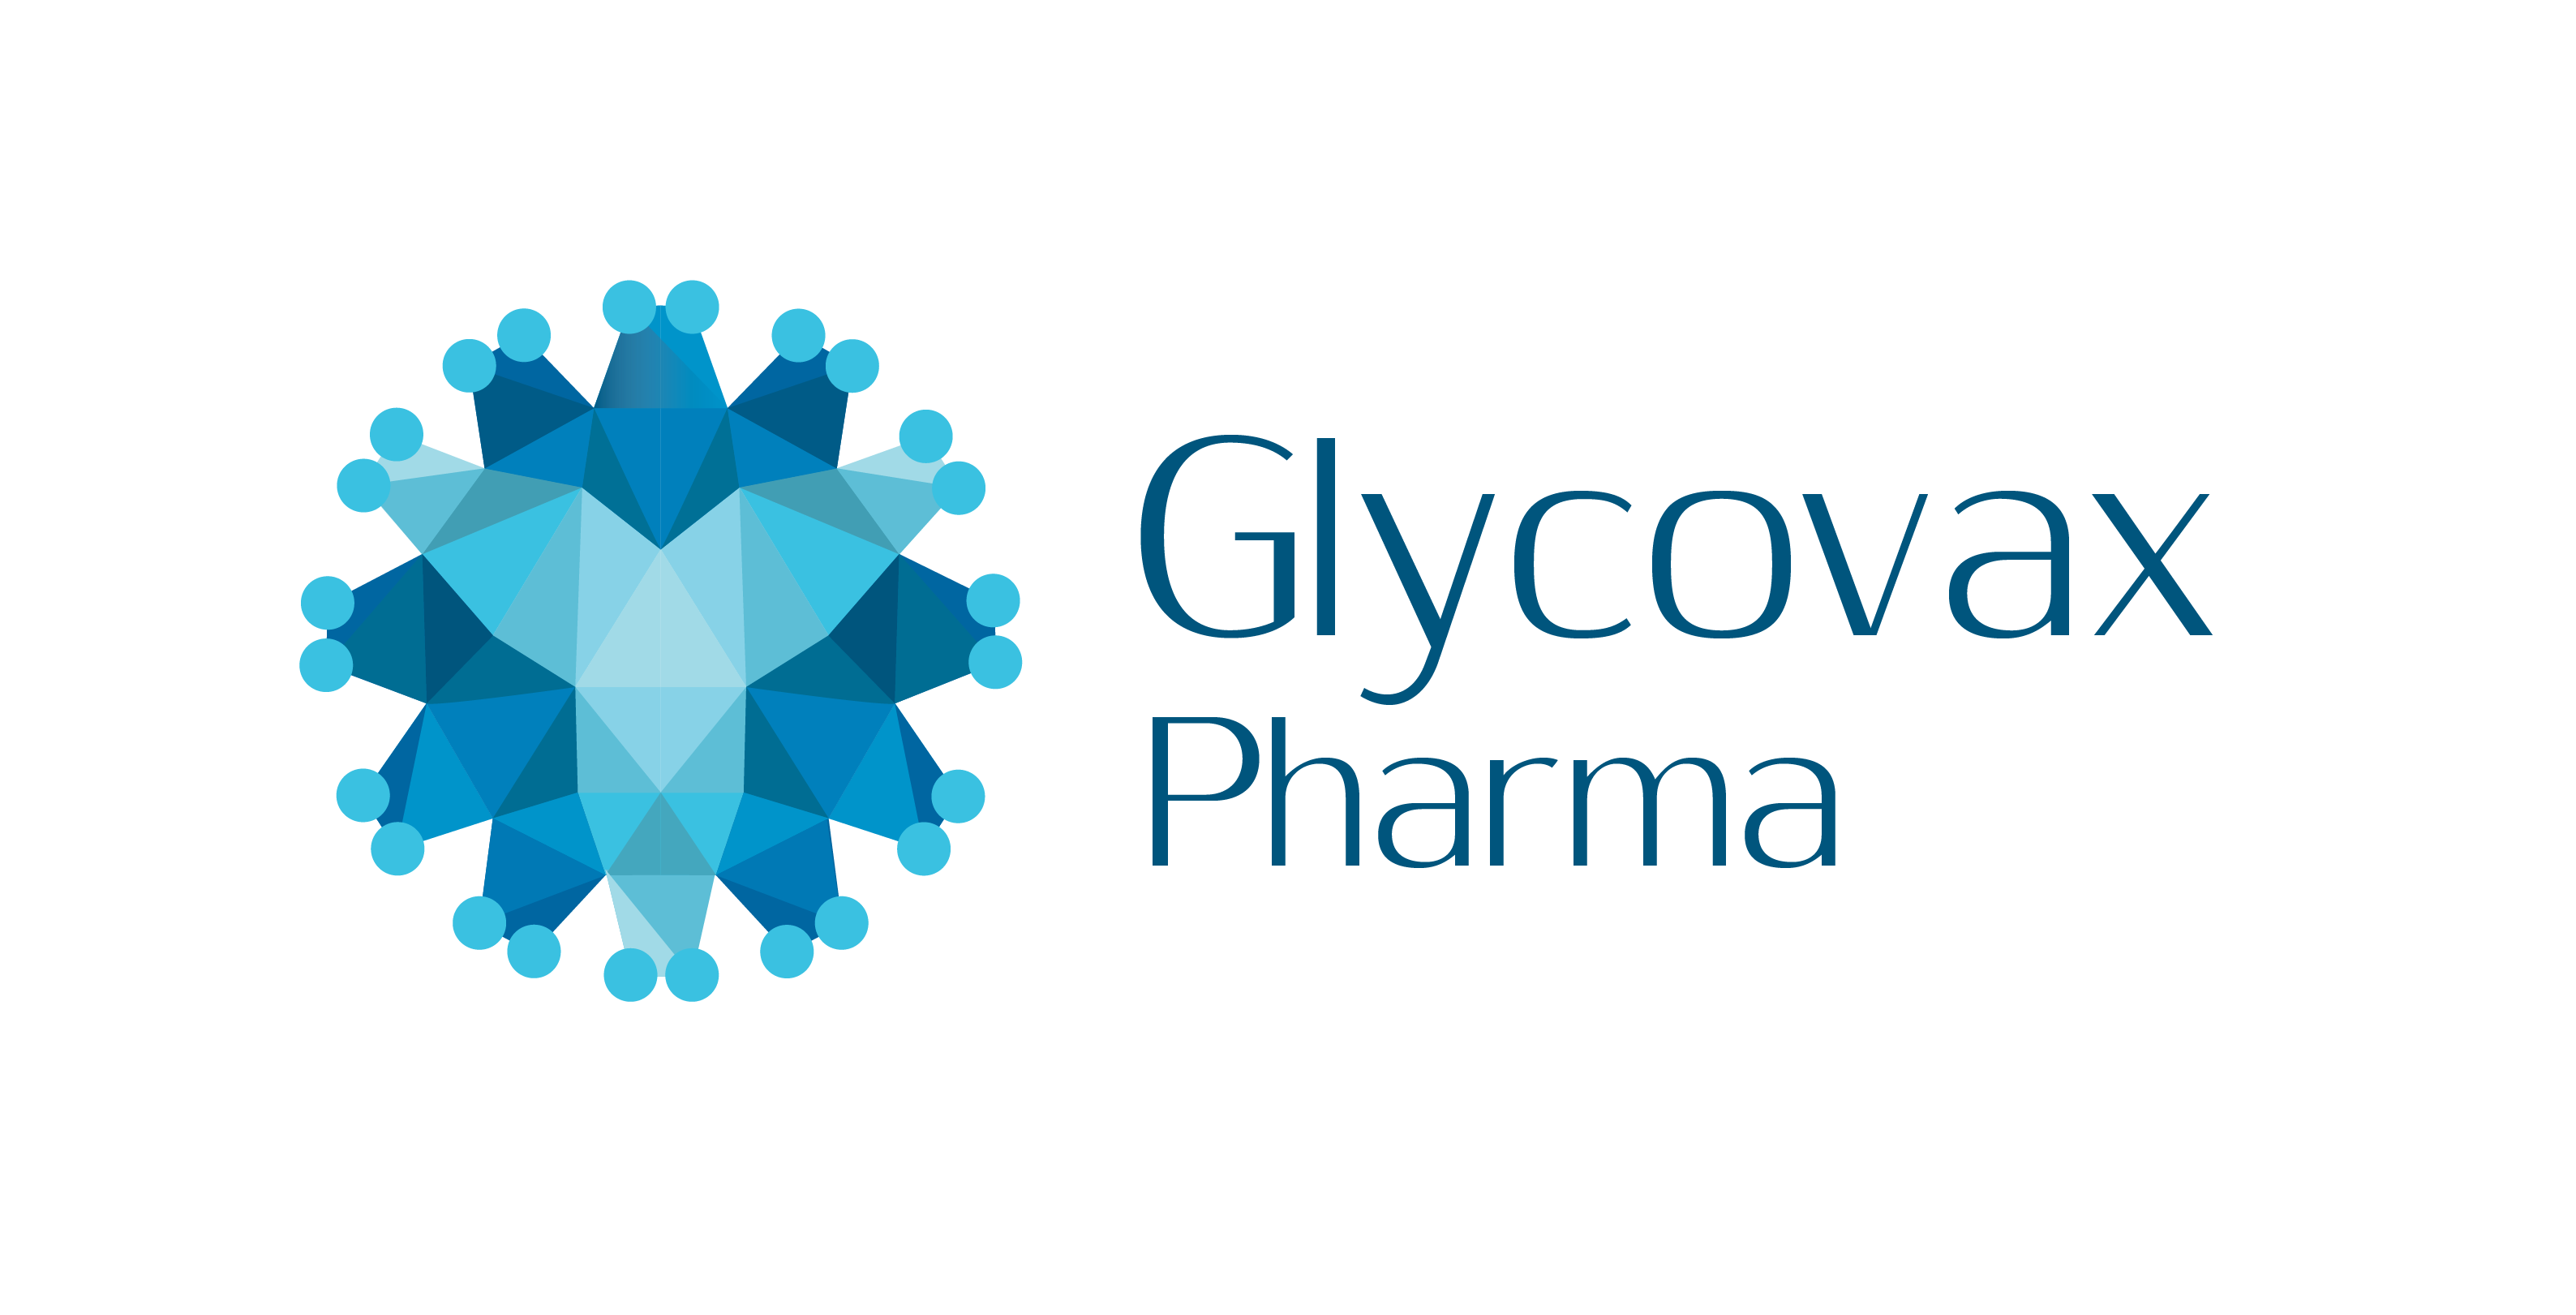 Glycovax Pharma